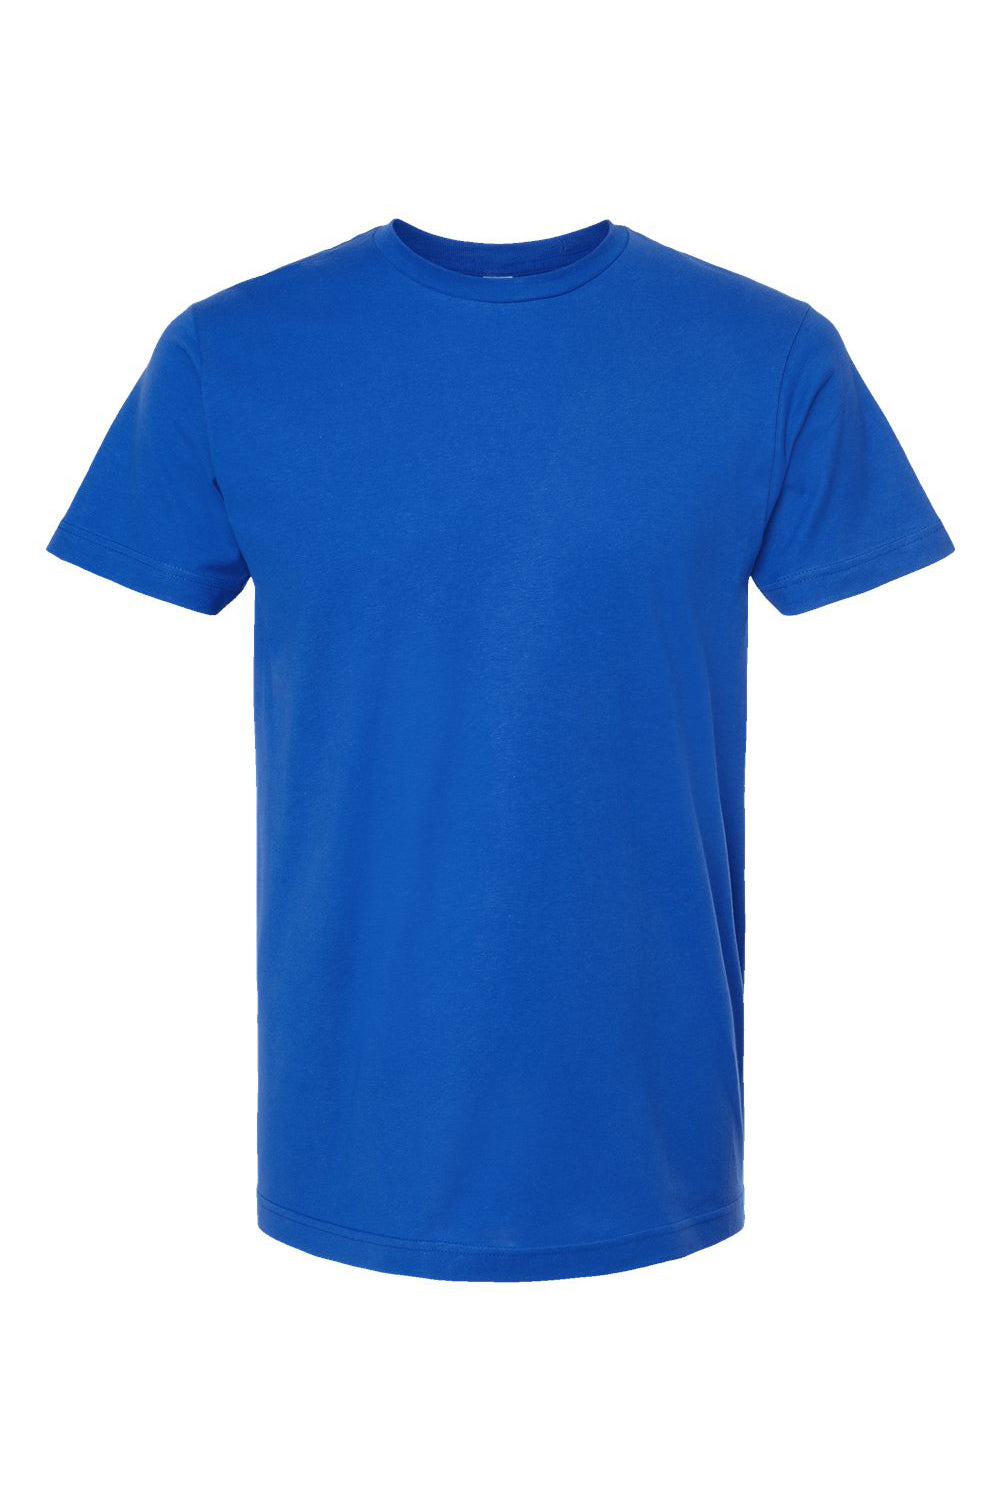 Tultex 202 Mens Fine Jersey Short Sleeve Crewneck T-Shirt Royal Blue Flat Front